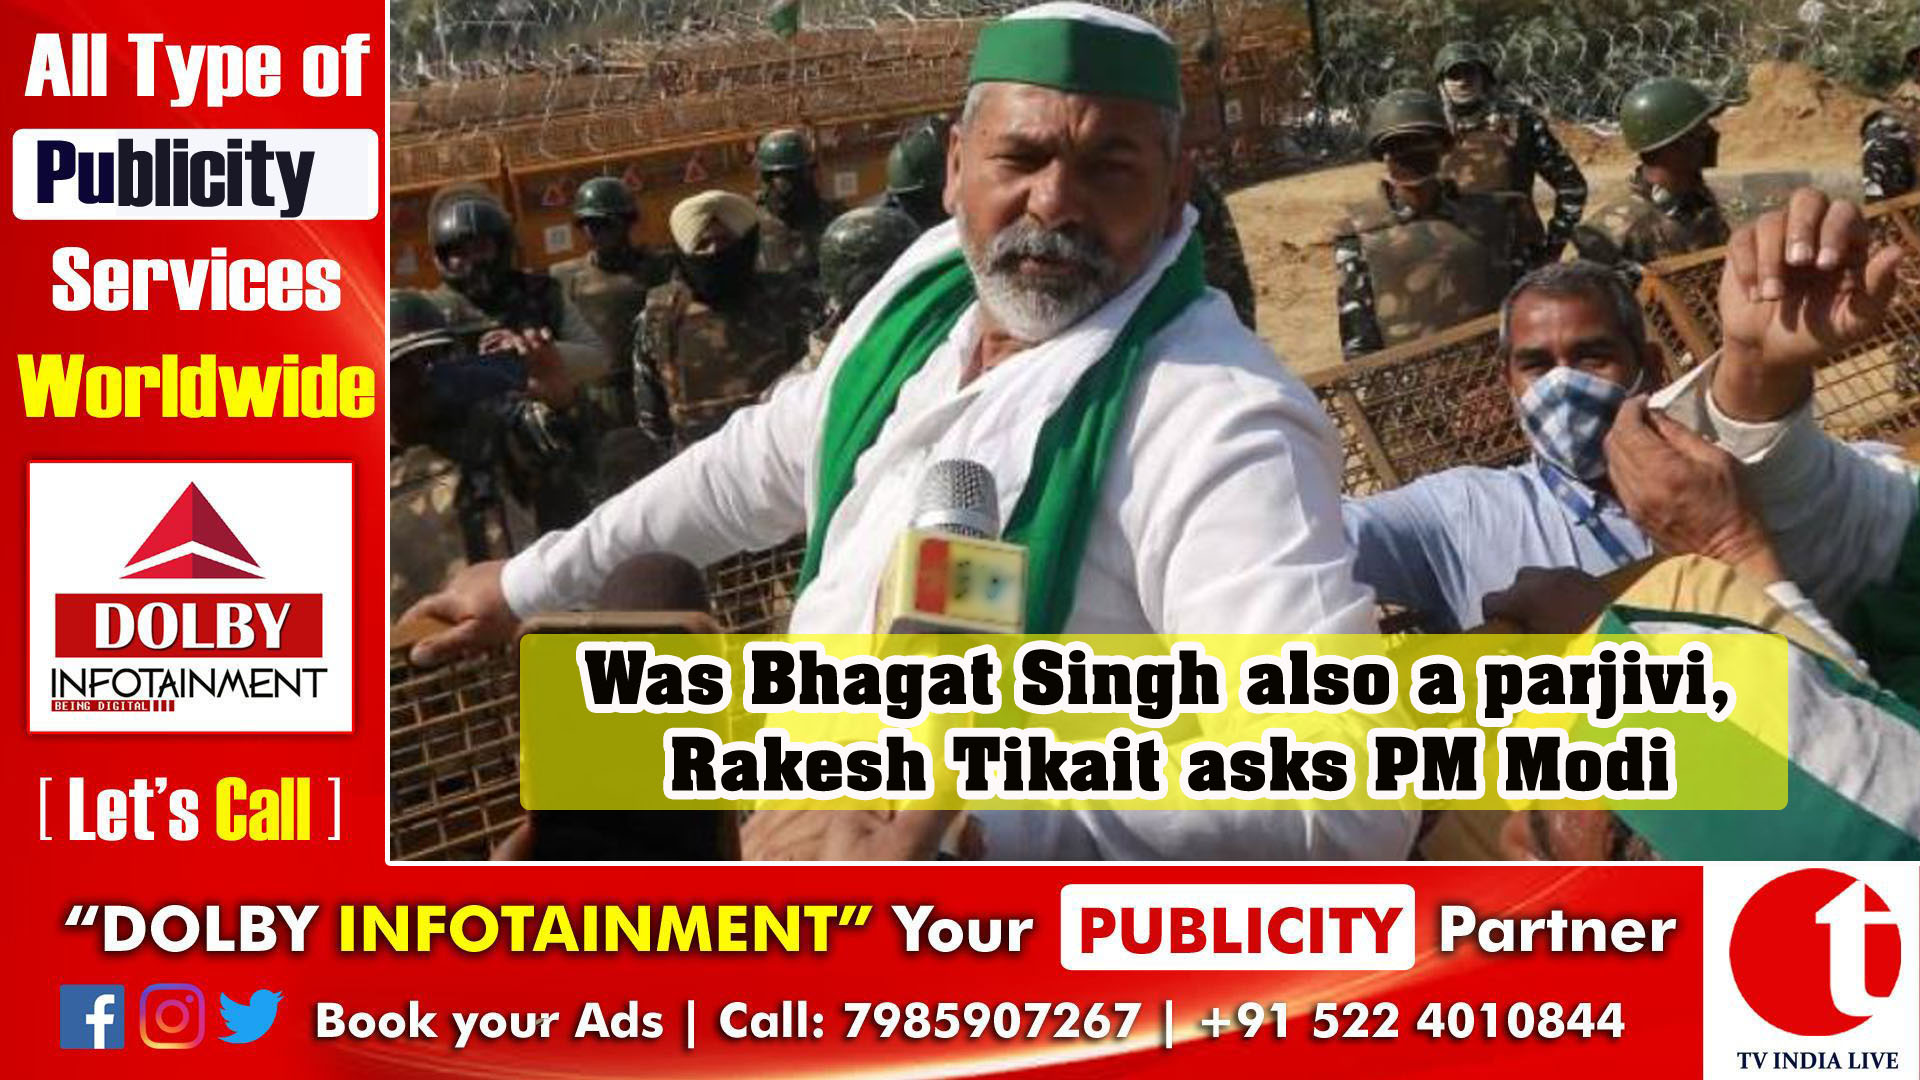 Was Bhagat Singh also a parjivi, Tikait asks PM Modi